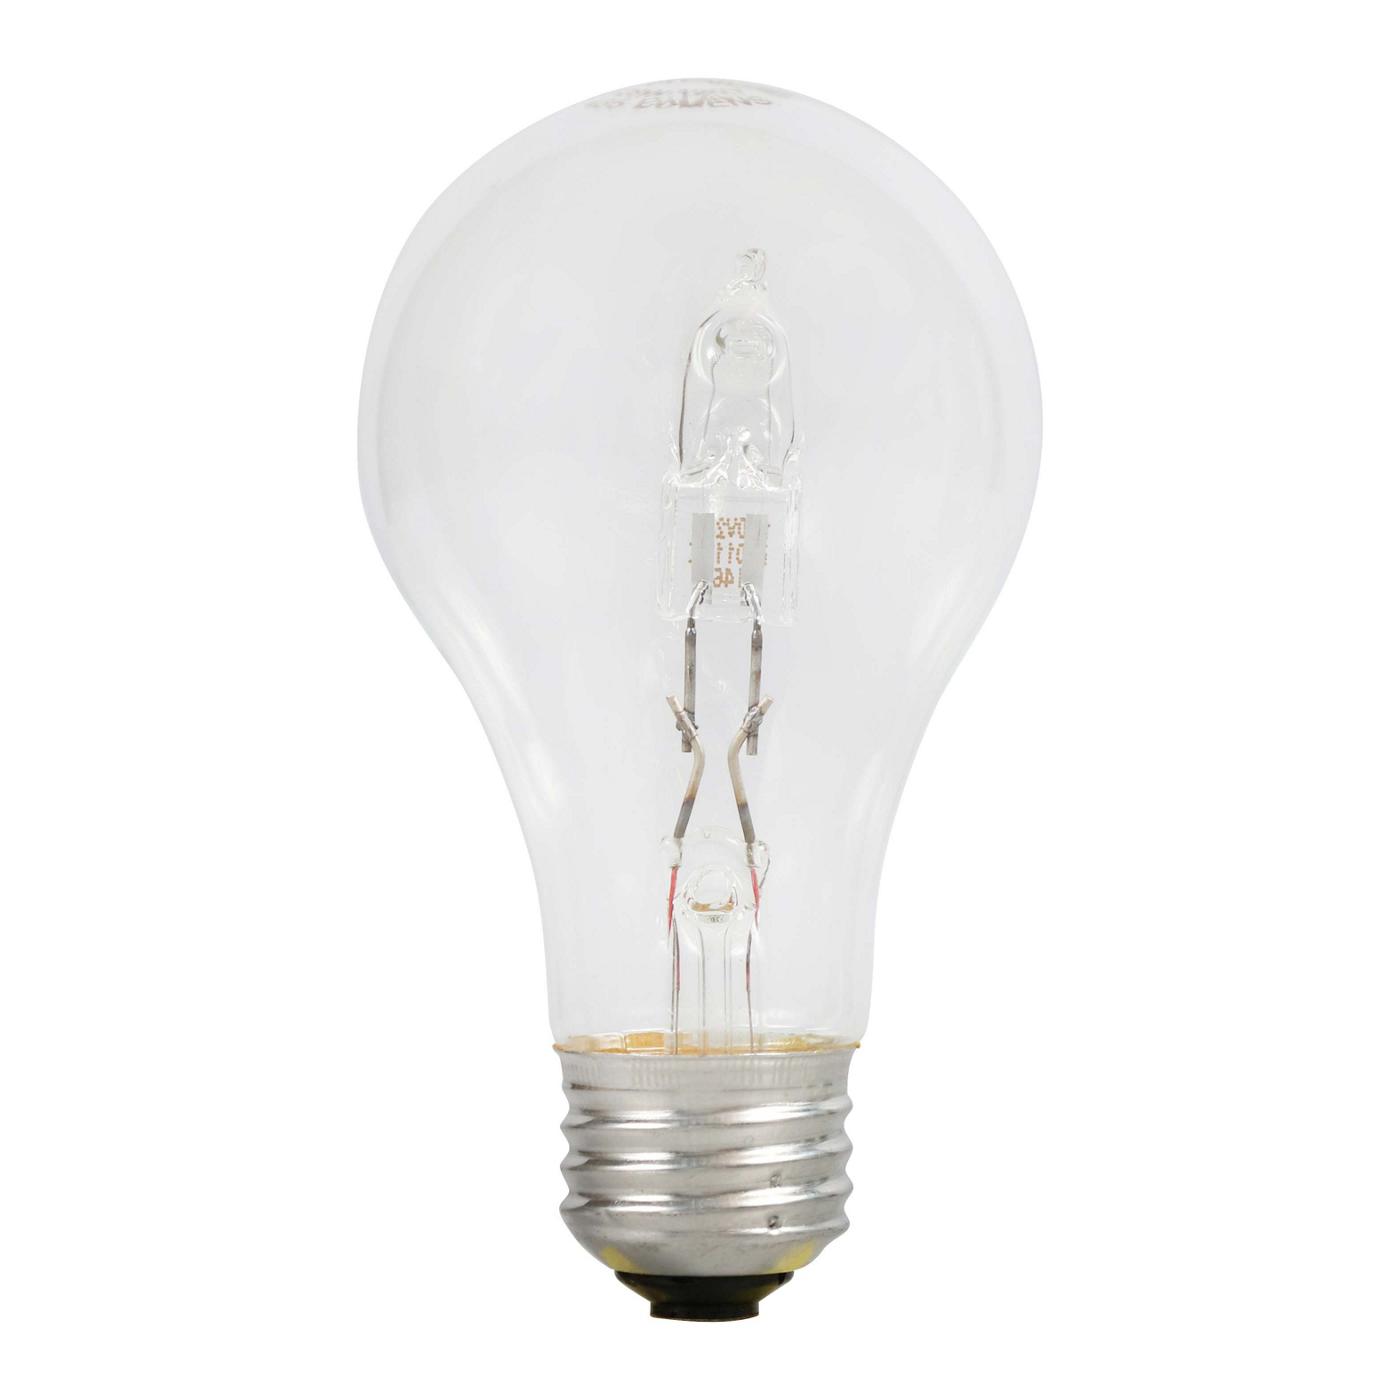 Sylvania A19 100-Watt Clear Halogen Light Bulbs; image 2 of 3